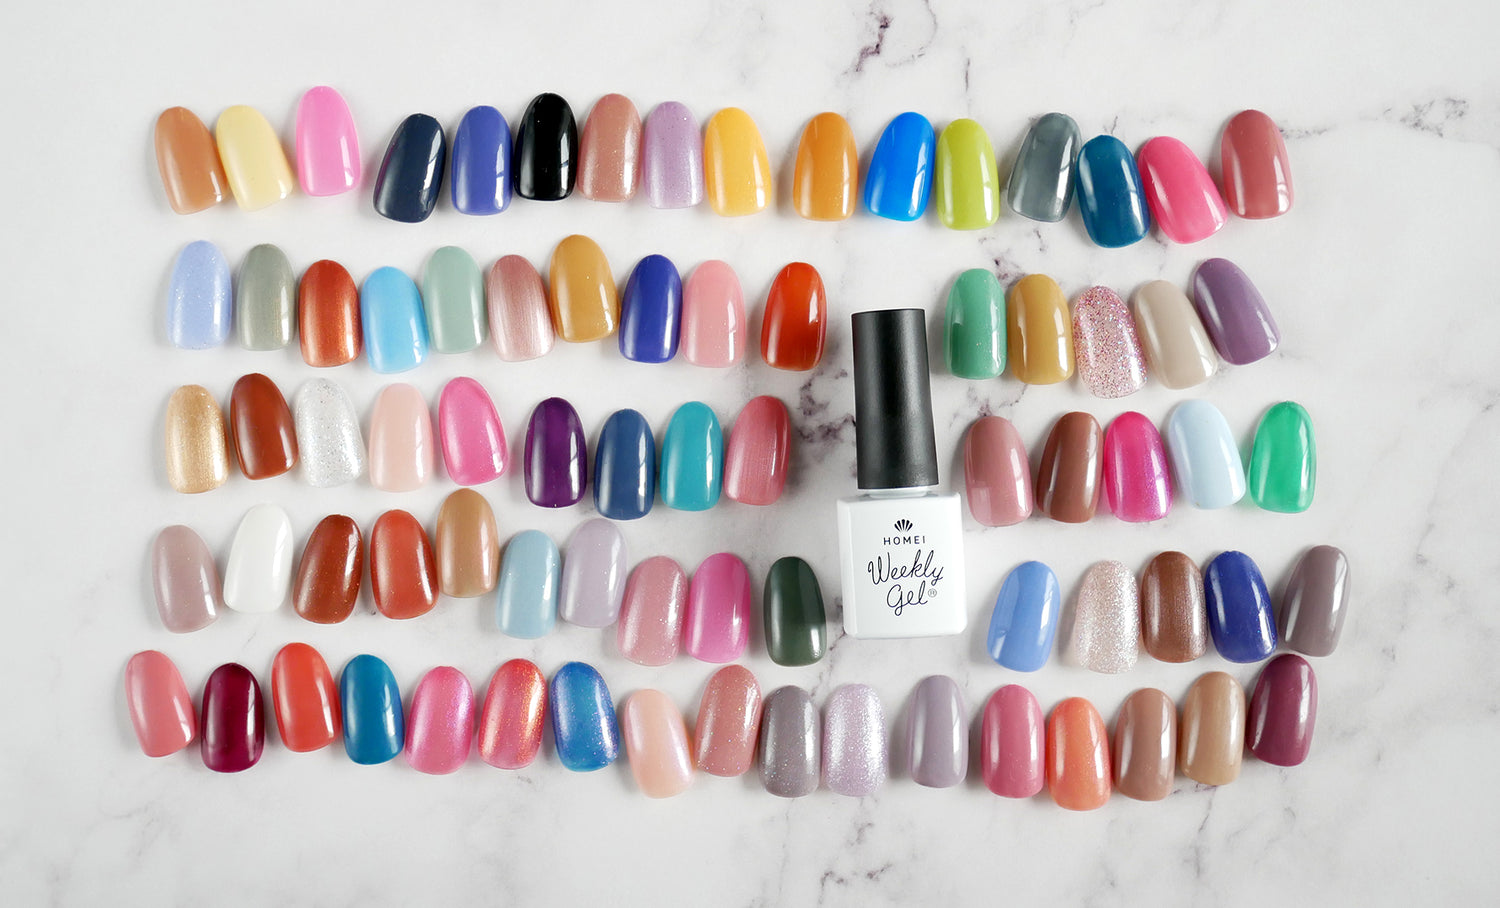 Weekly Gel gel nails colors showcasing more than70 colors